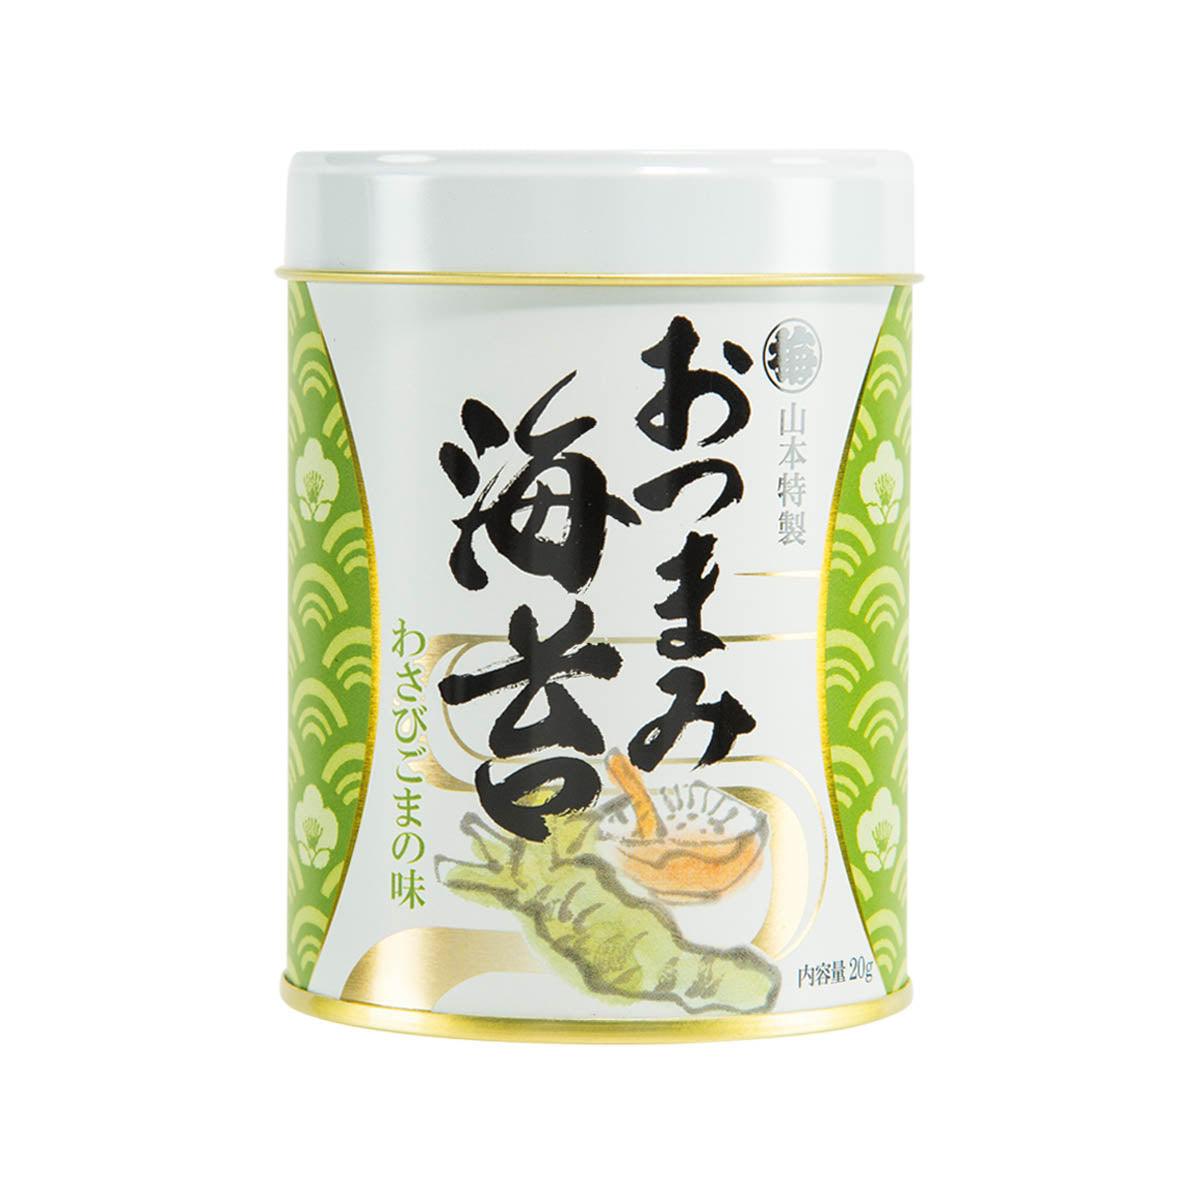 Yamamoto Noriten Seaweed Snack Wasabi Sesame g City Super